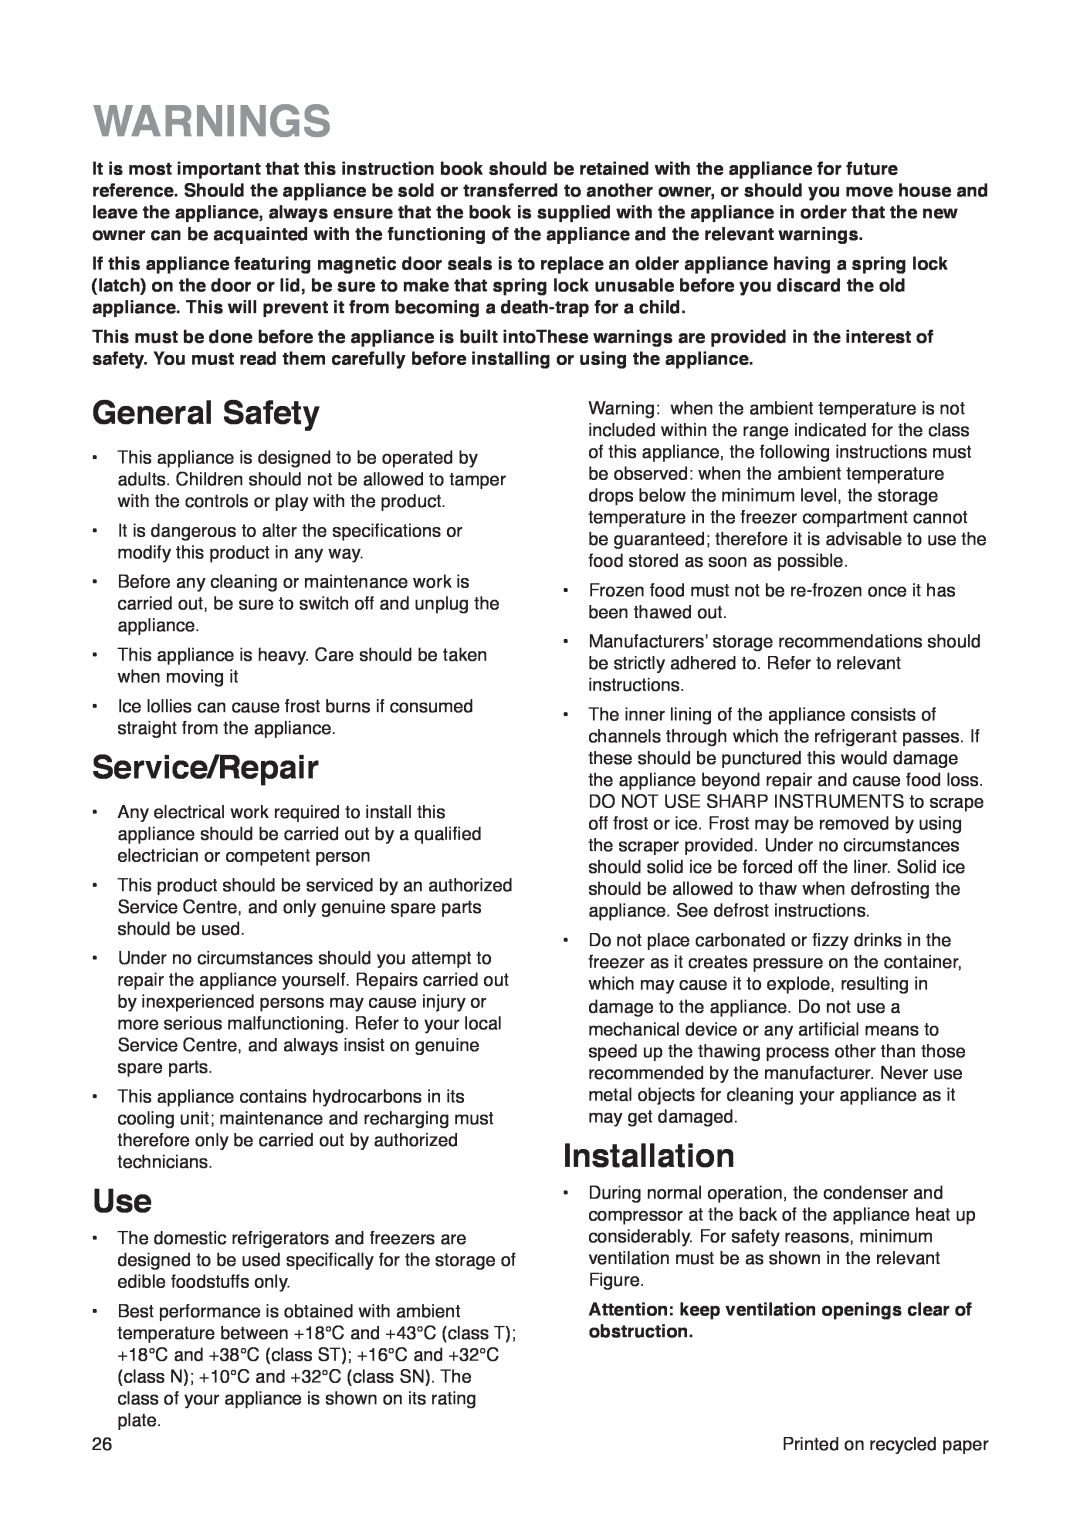 Zanussi ZD 19/4 manual Warnings, General Safety, Service/Repair, Installation 